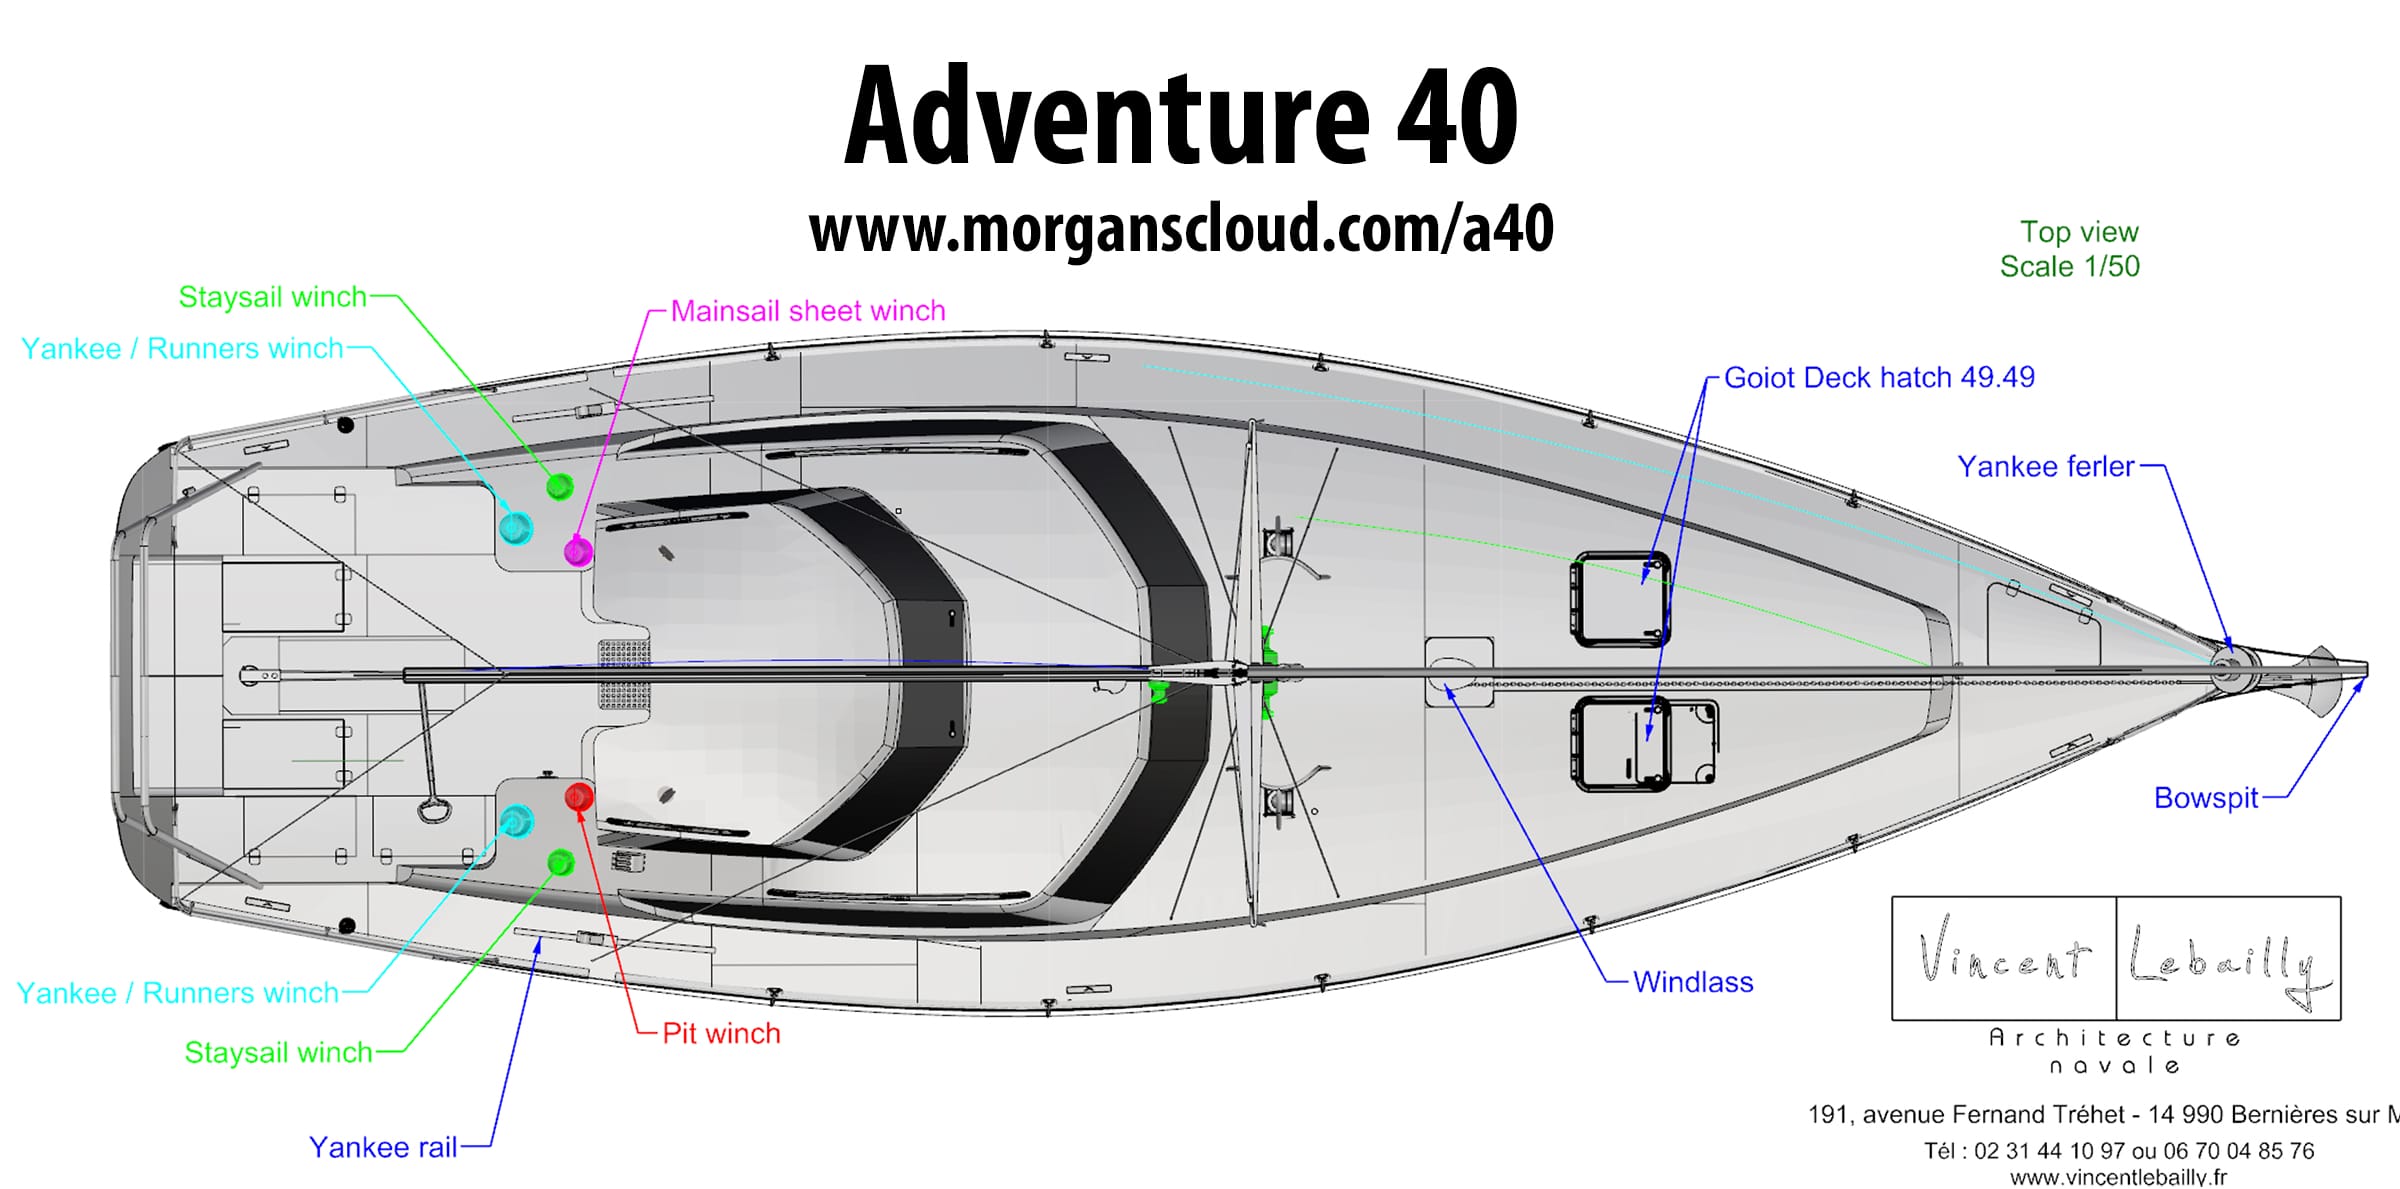 Adventure 40 Reveal—On Deck